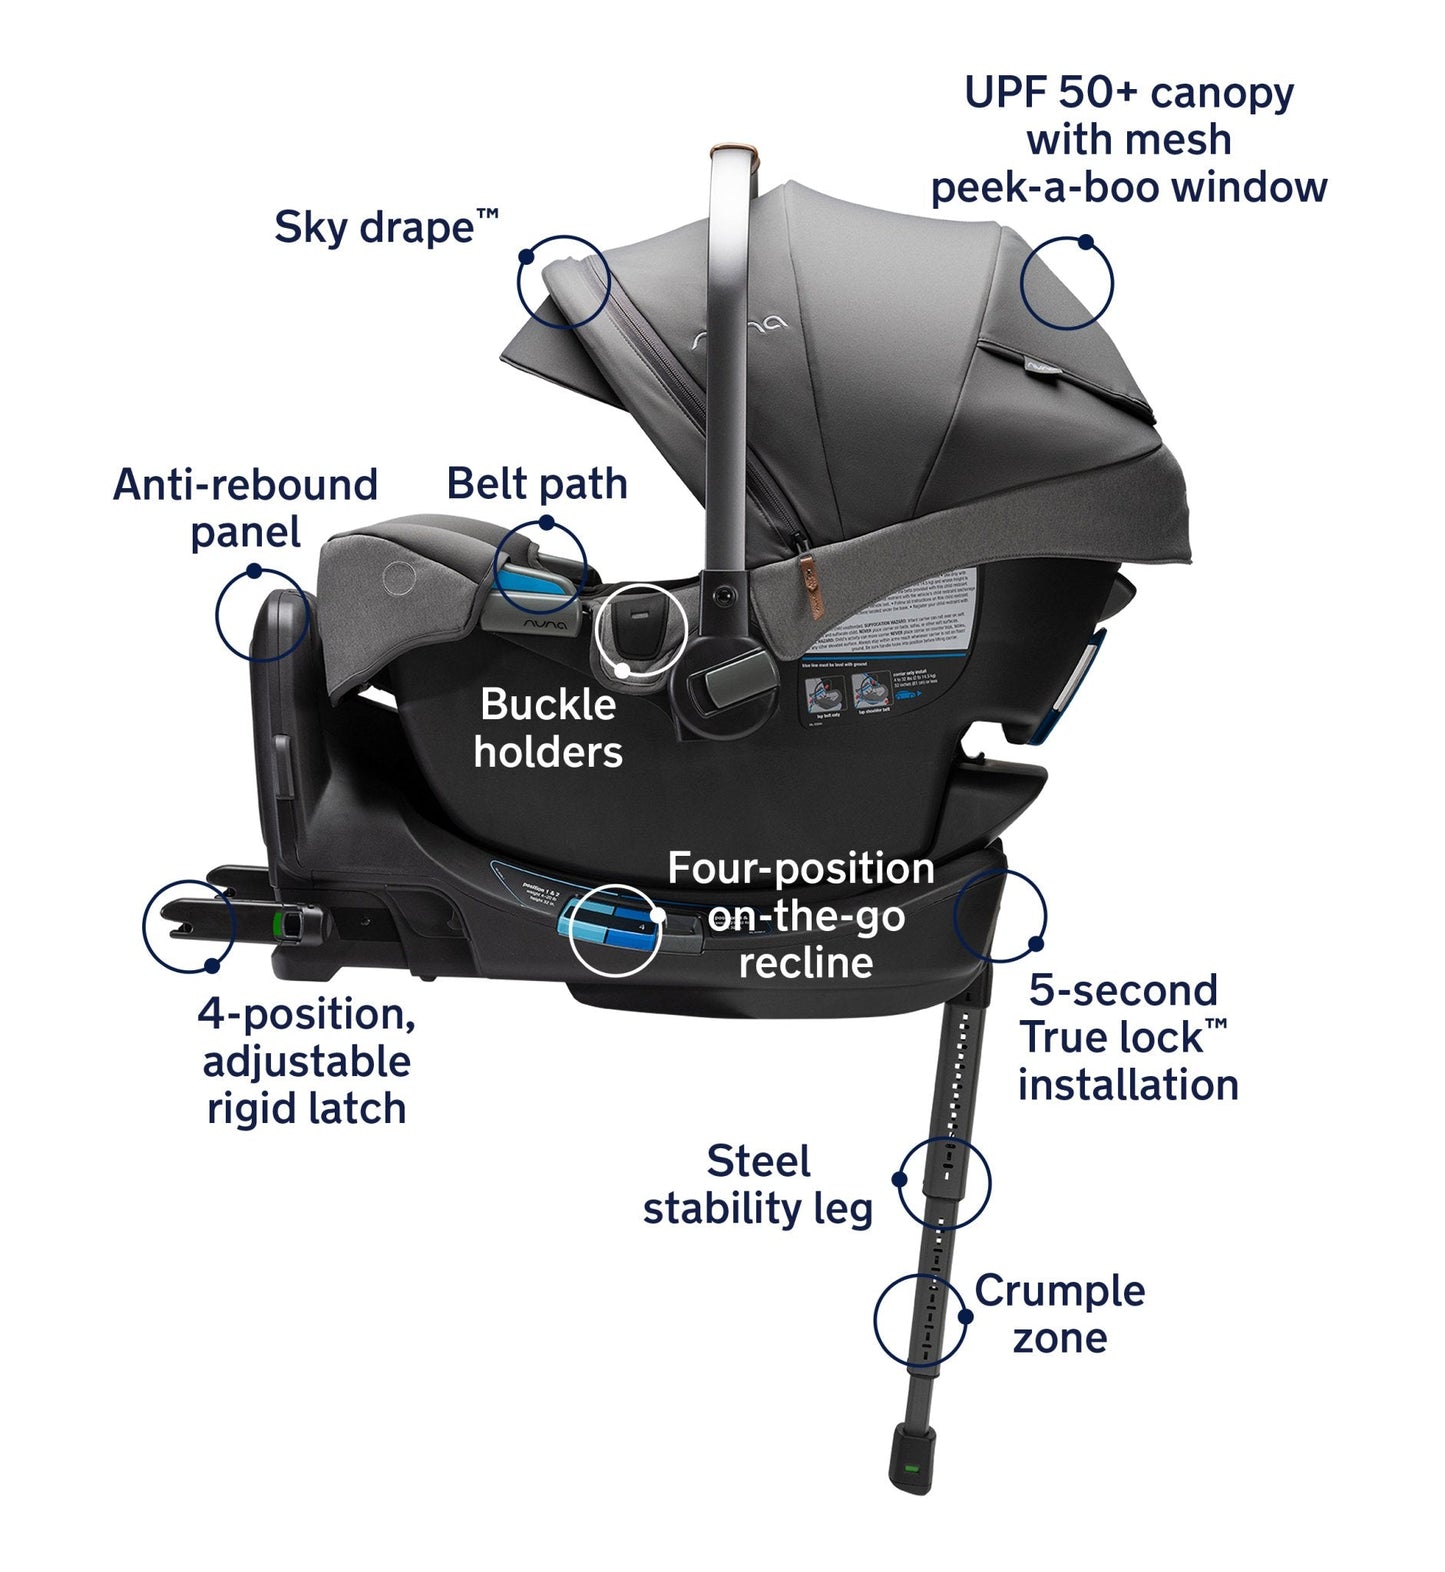 Nuna Demi Next Double Stroller + Rider Board + 2 PIPA RX Travel System